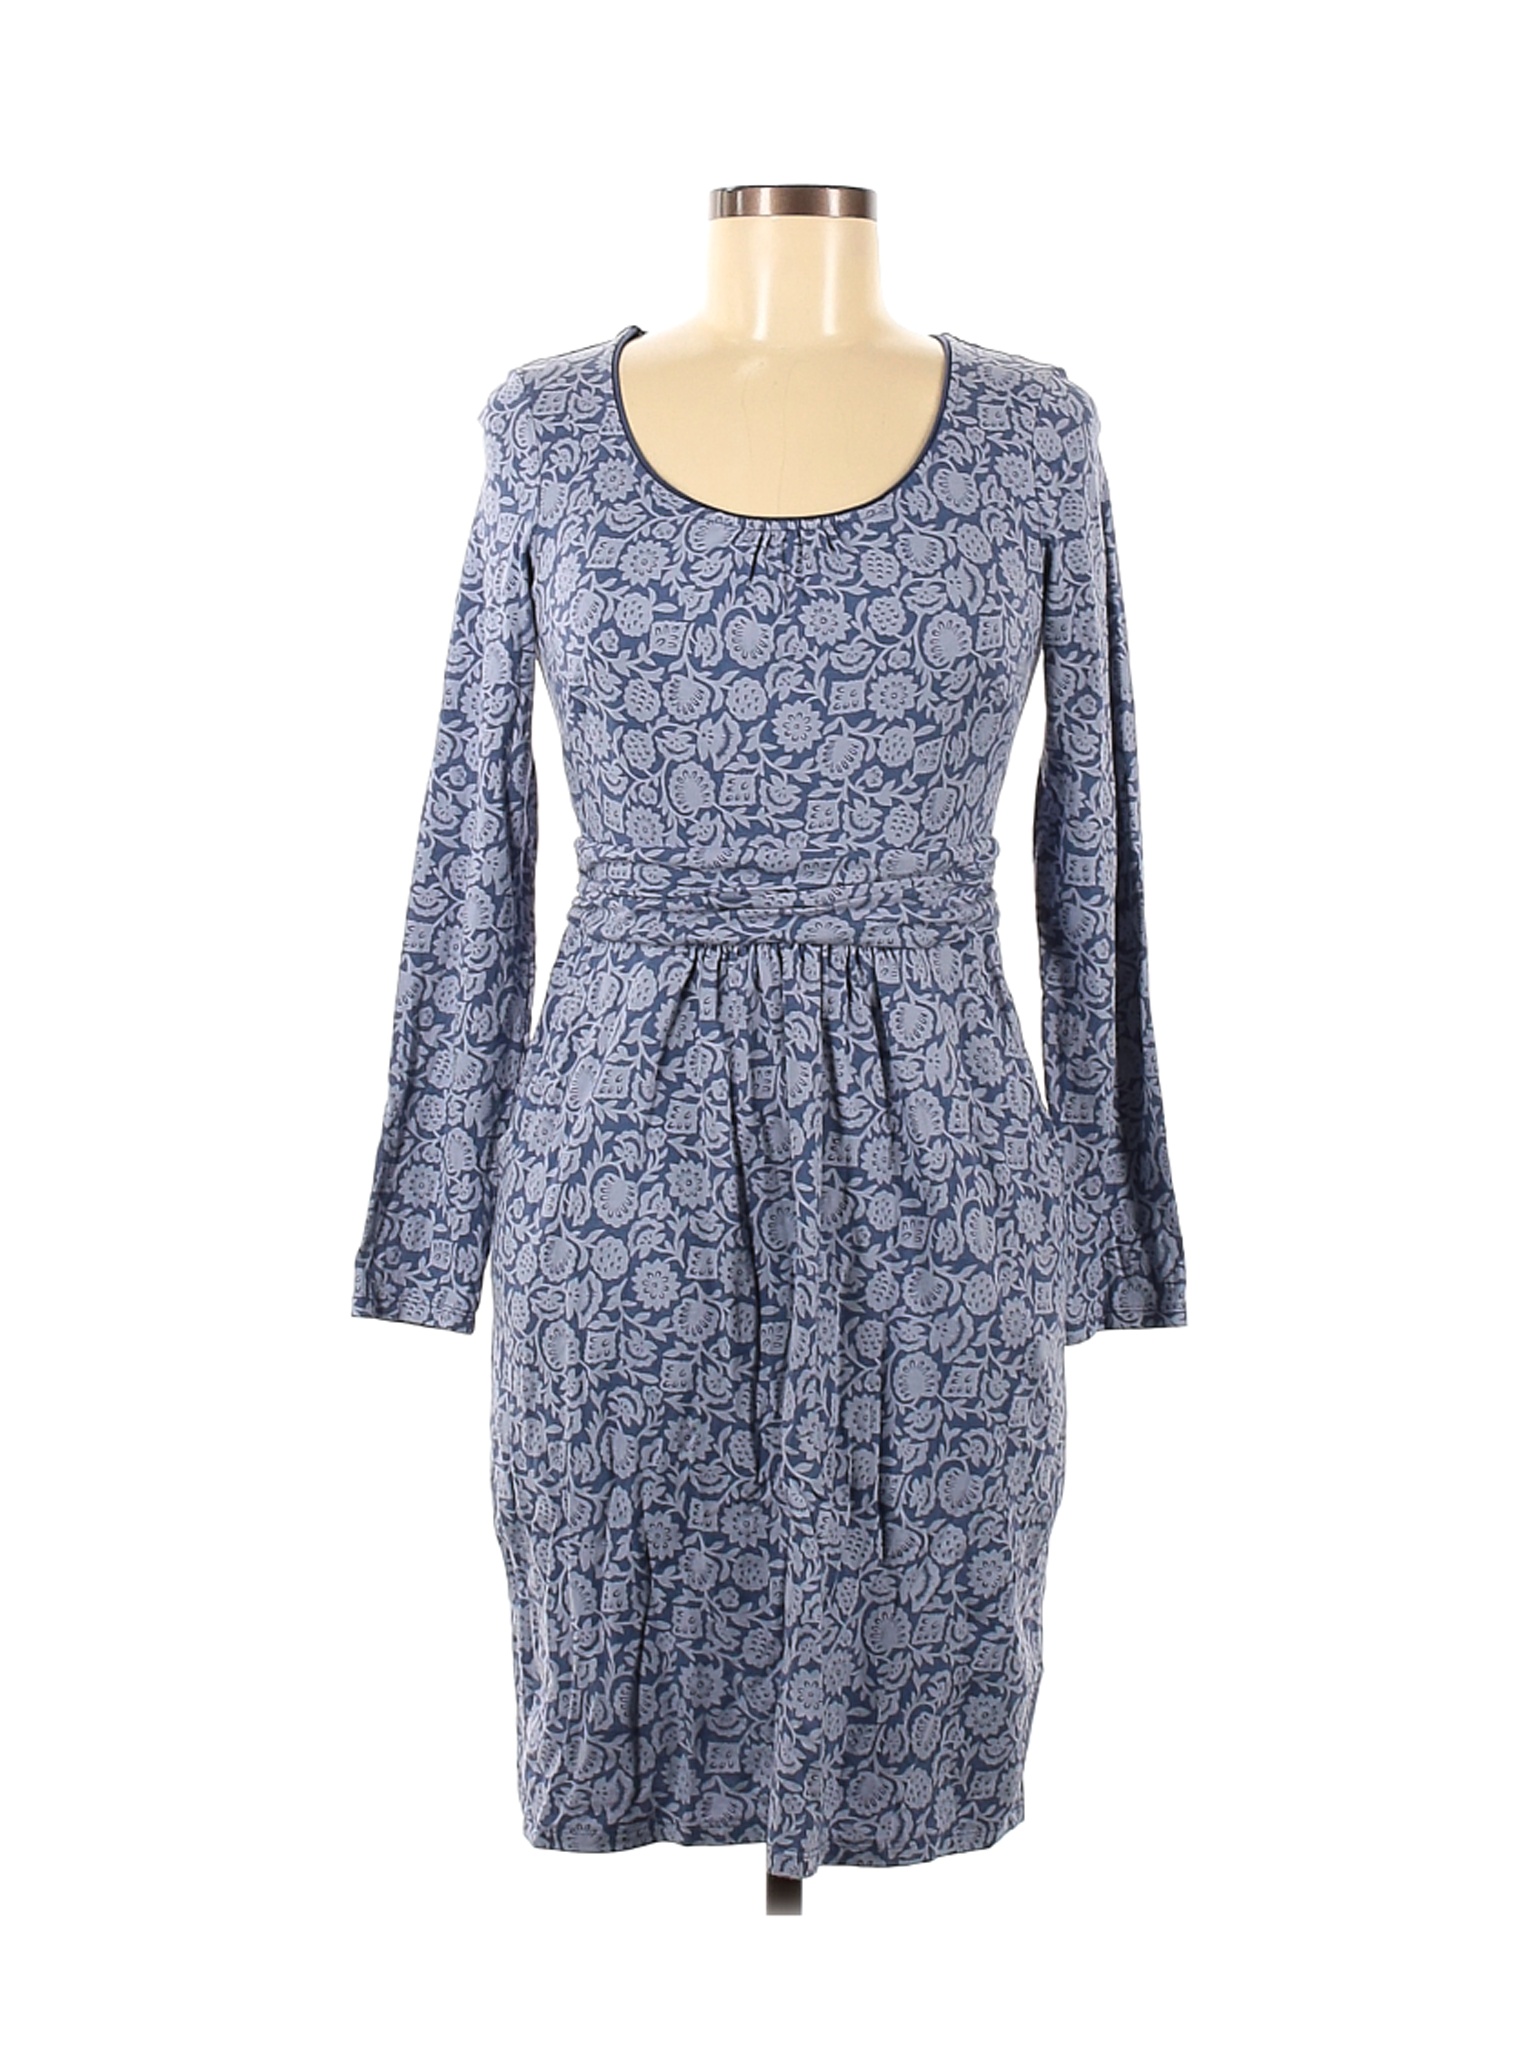 Boden Women Blue Casual Dress 6 | eBay